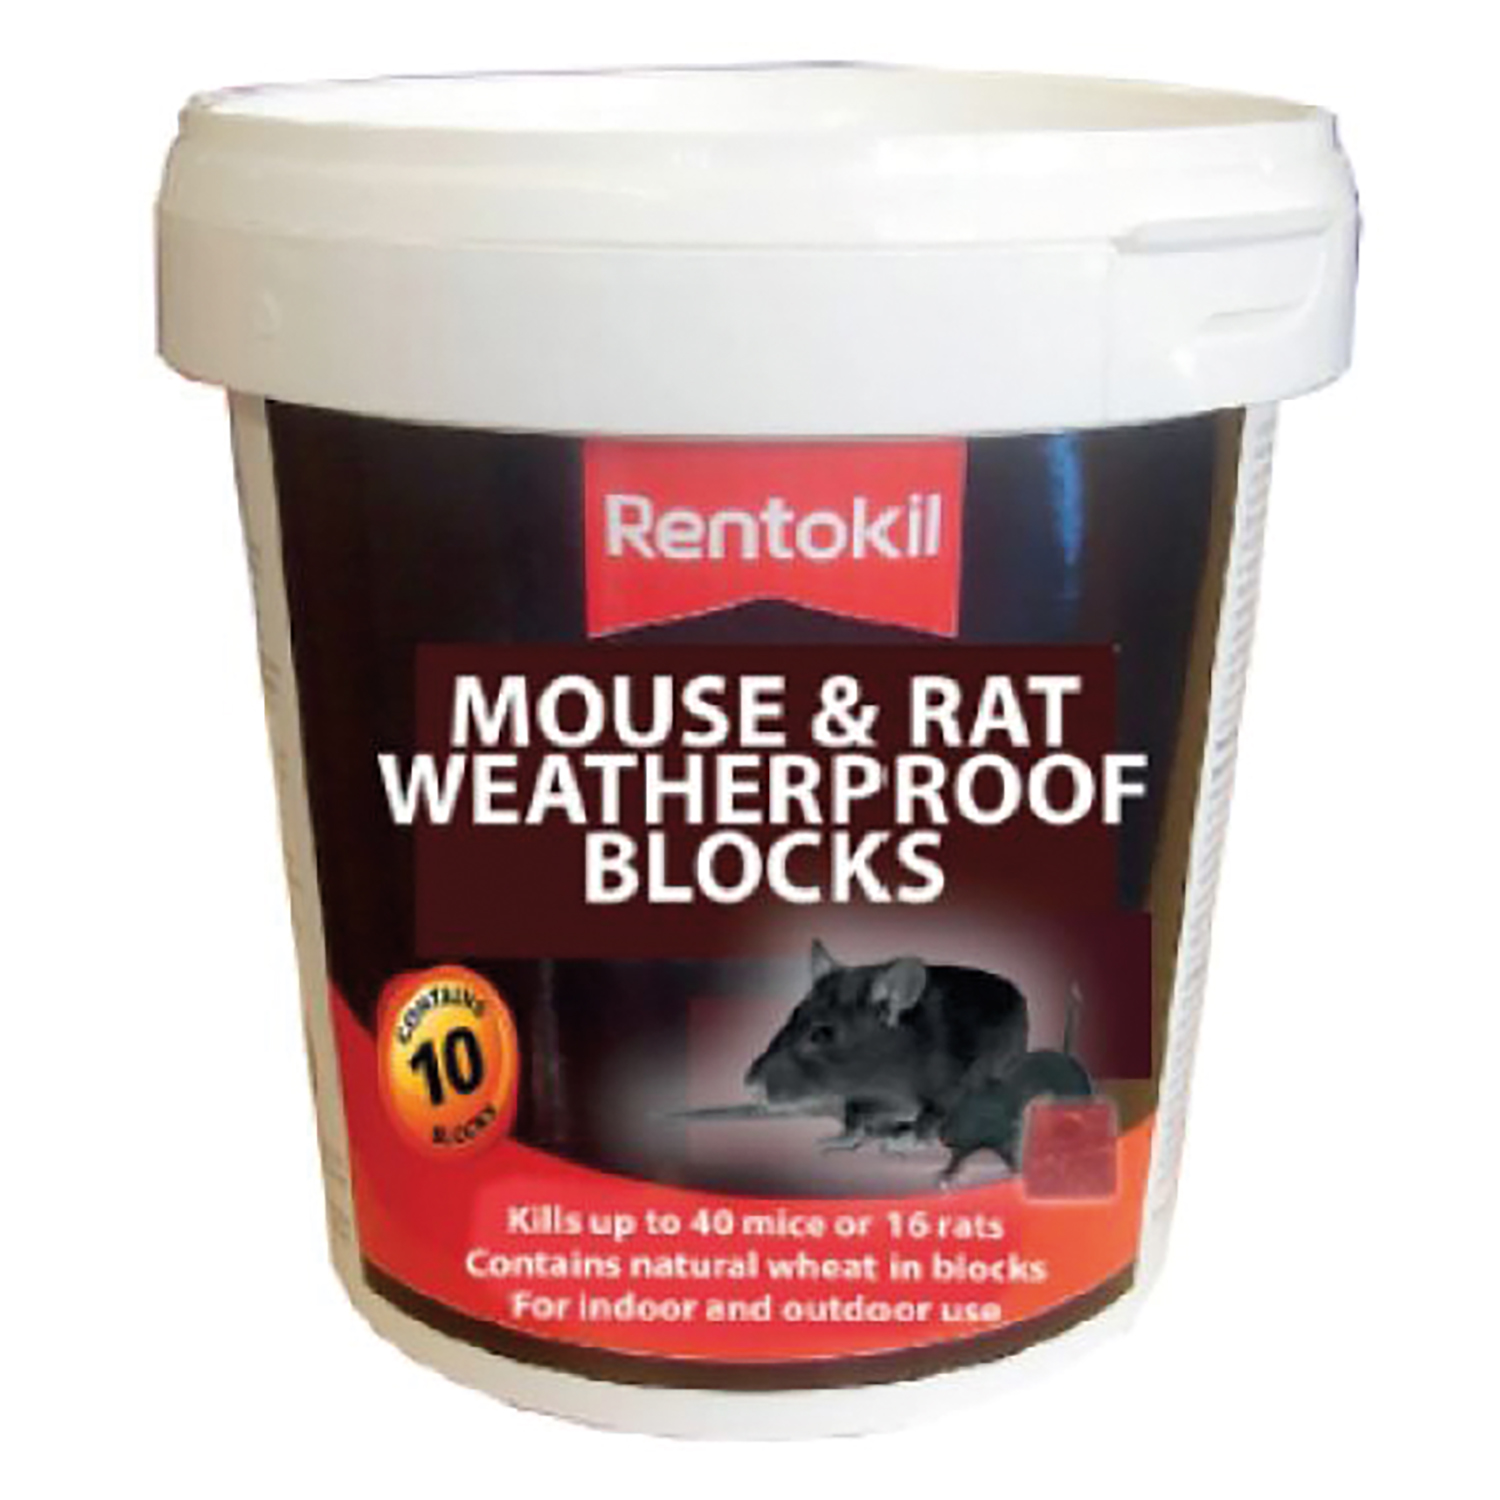 RENTOKIL MOUSE & RAT WEATHERPROOF BLOCKS 10 PACK